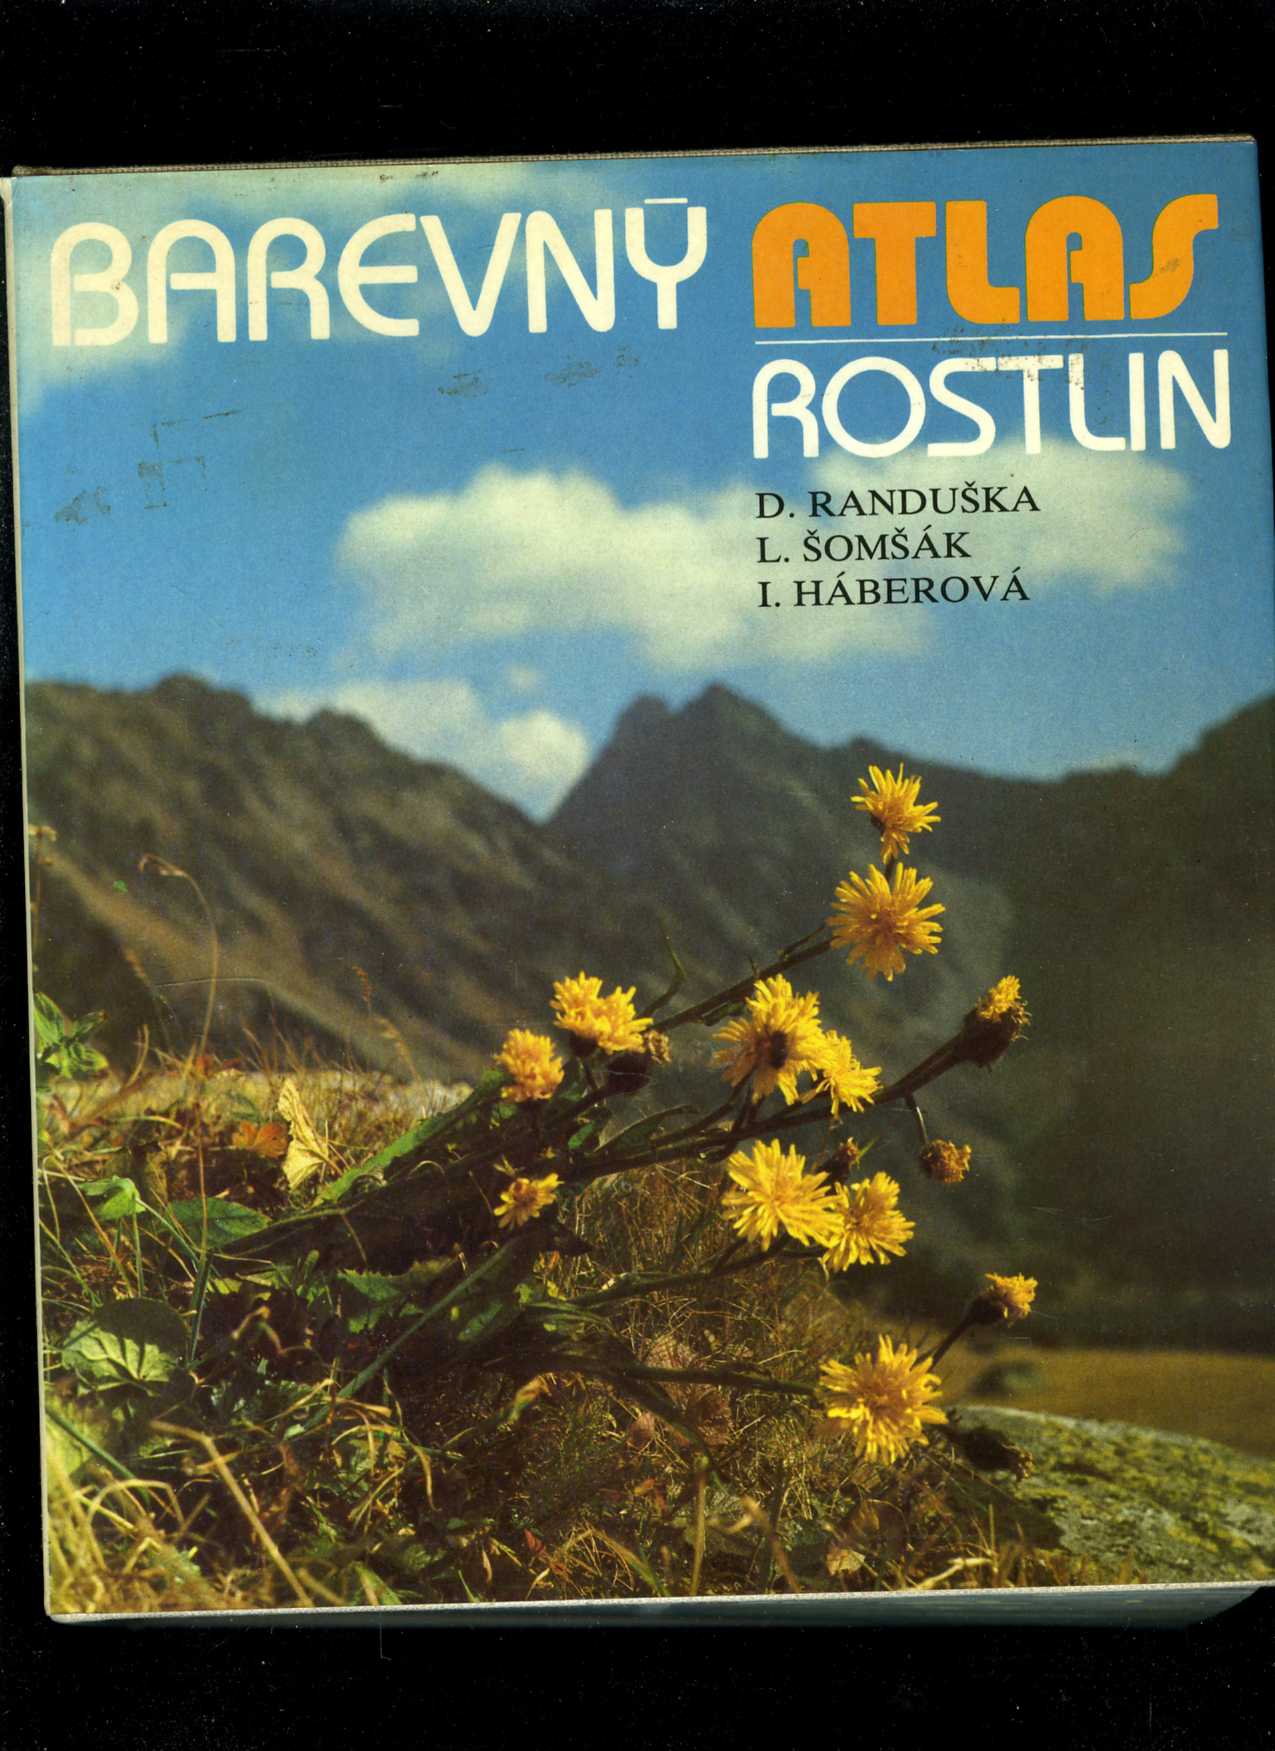 Barevný atlas rostlin (Ladislav Šomšák, Dušan Randuška, Izabela Háberová)